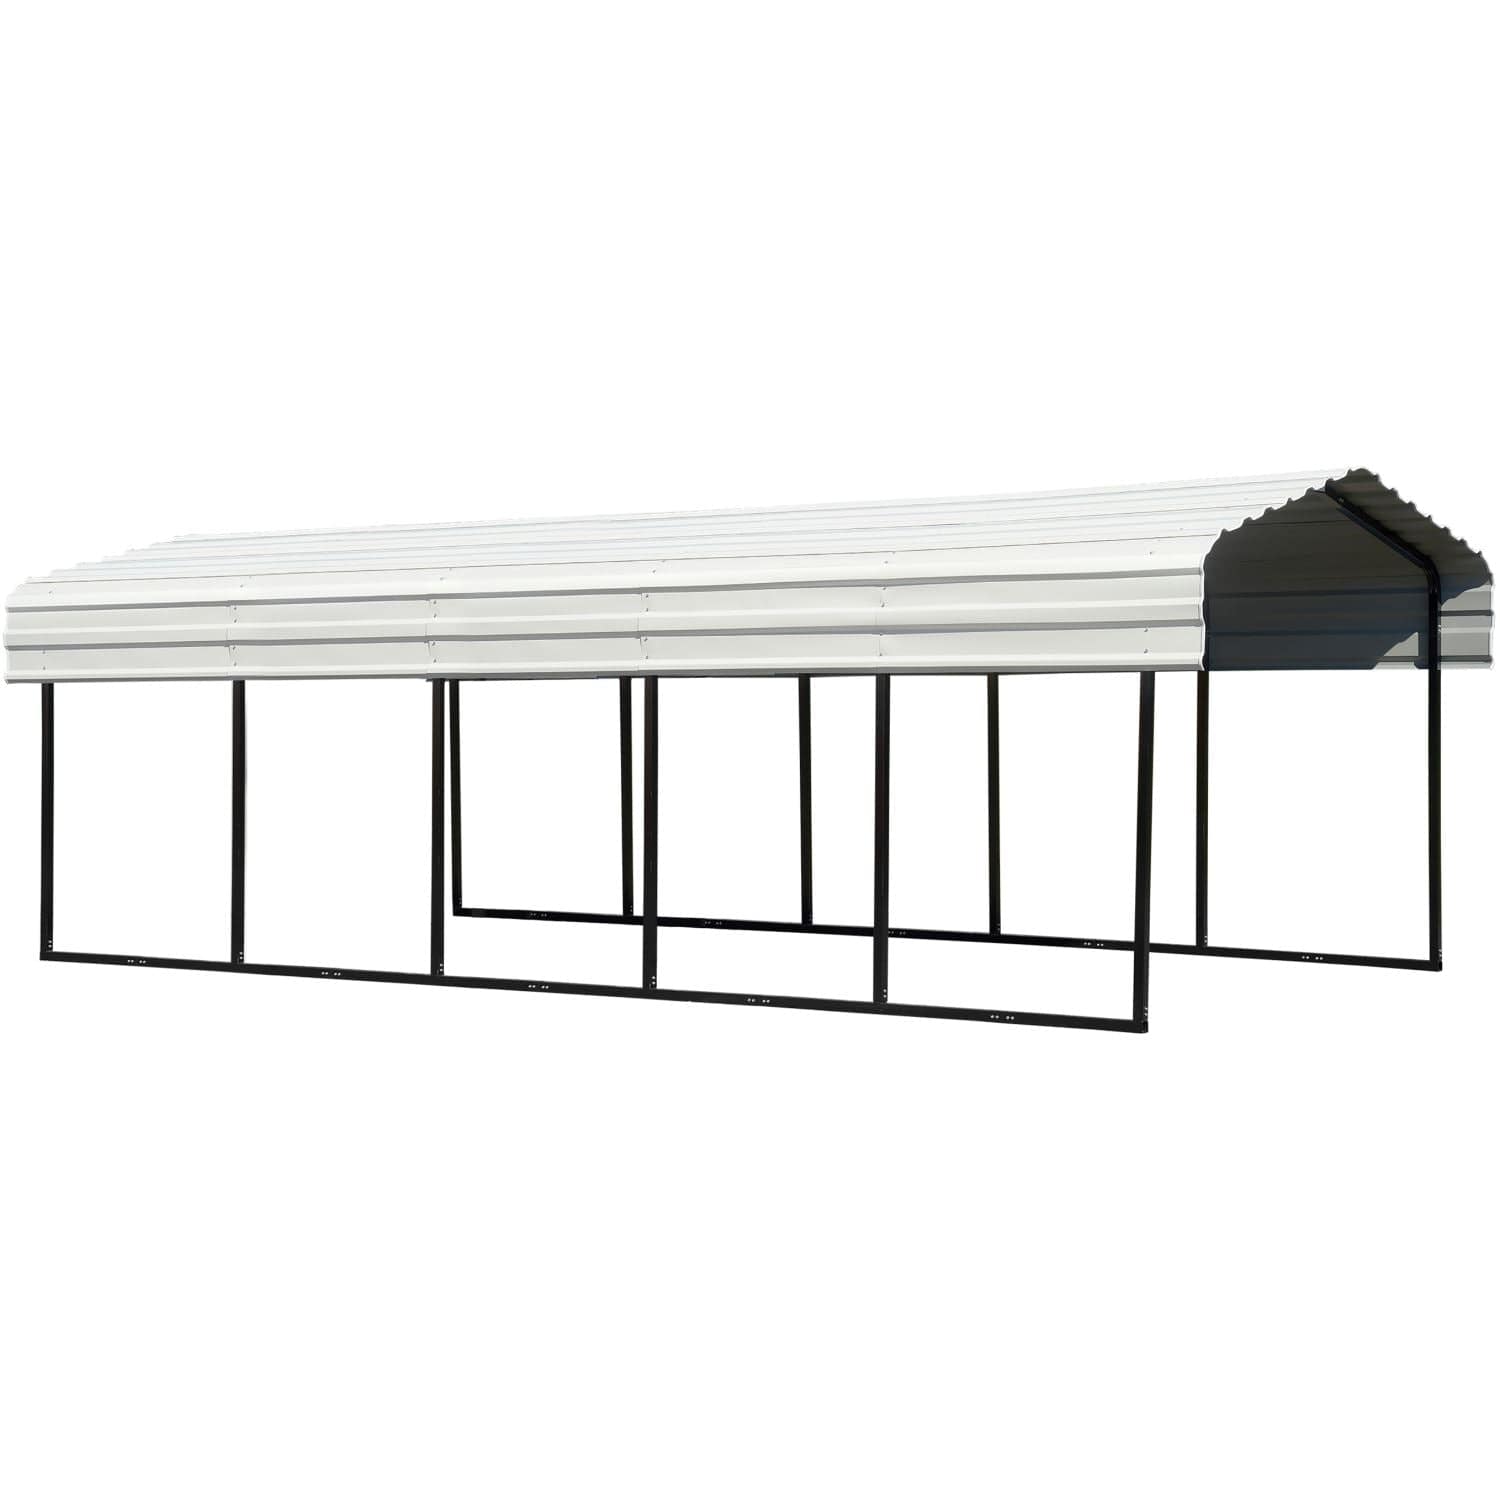 Arrow Steel Carport 10' x 24' x 7' Galvanized Black/Eggshell - mygreenhousestore.com